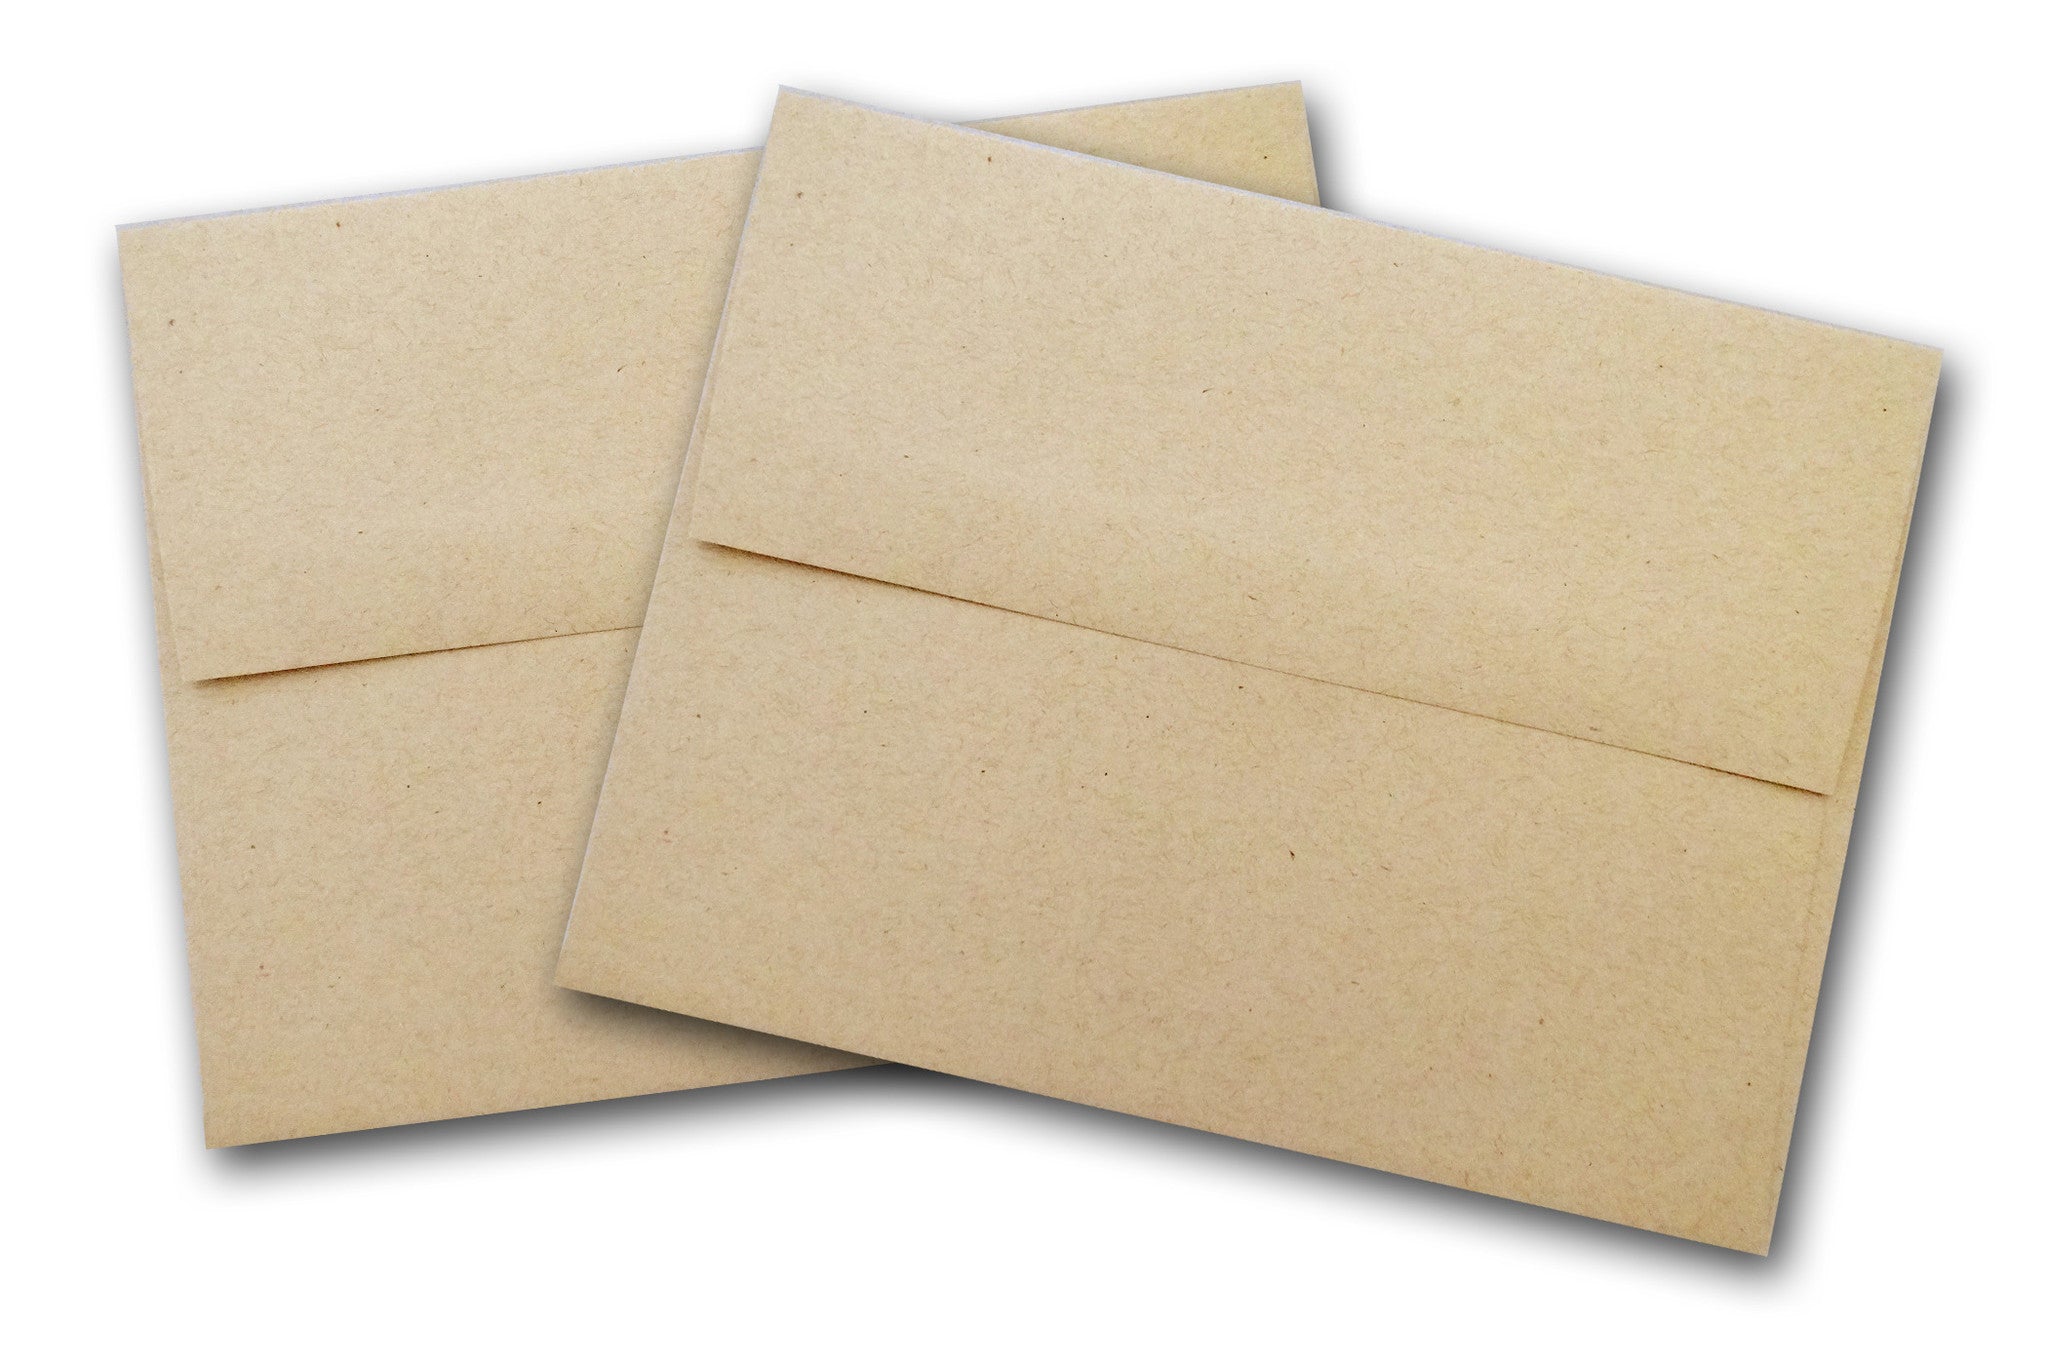 Environment Desert Storm A4 Envelopes for enclosing 4x6 DIY Cards